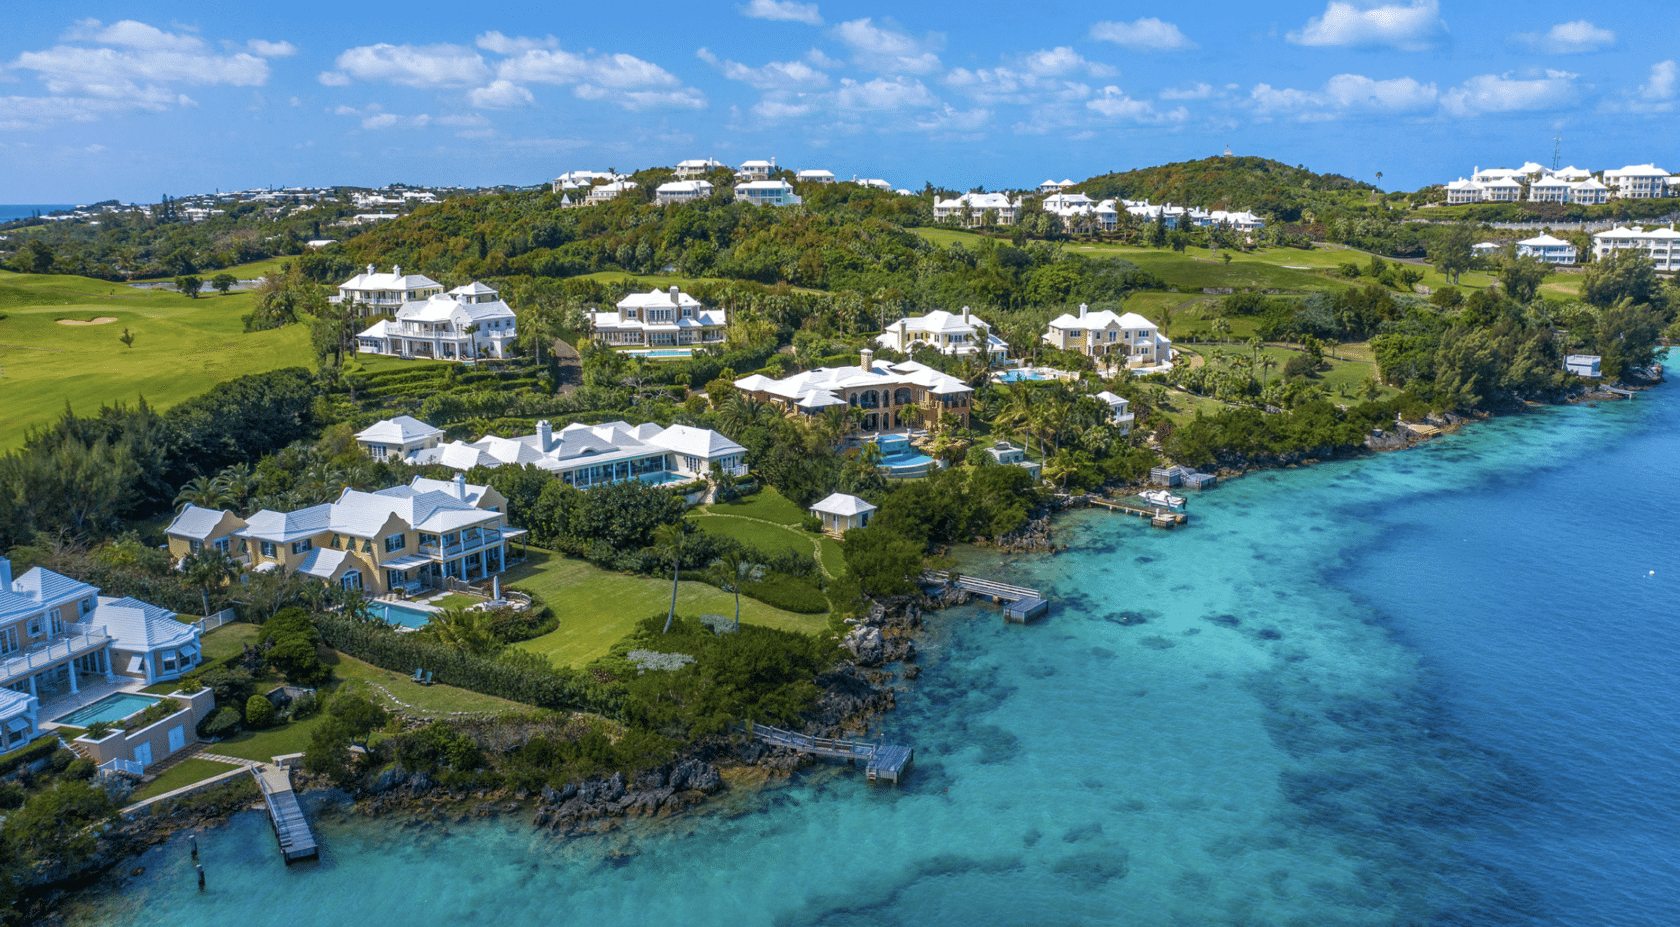 An aerial view of a resort in Bermuda, showcasing the stunning bermuda real estate.